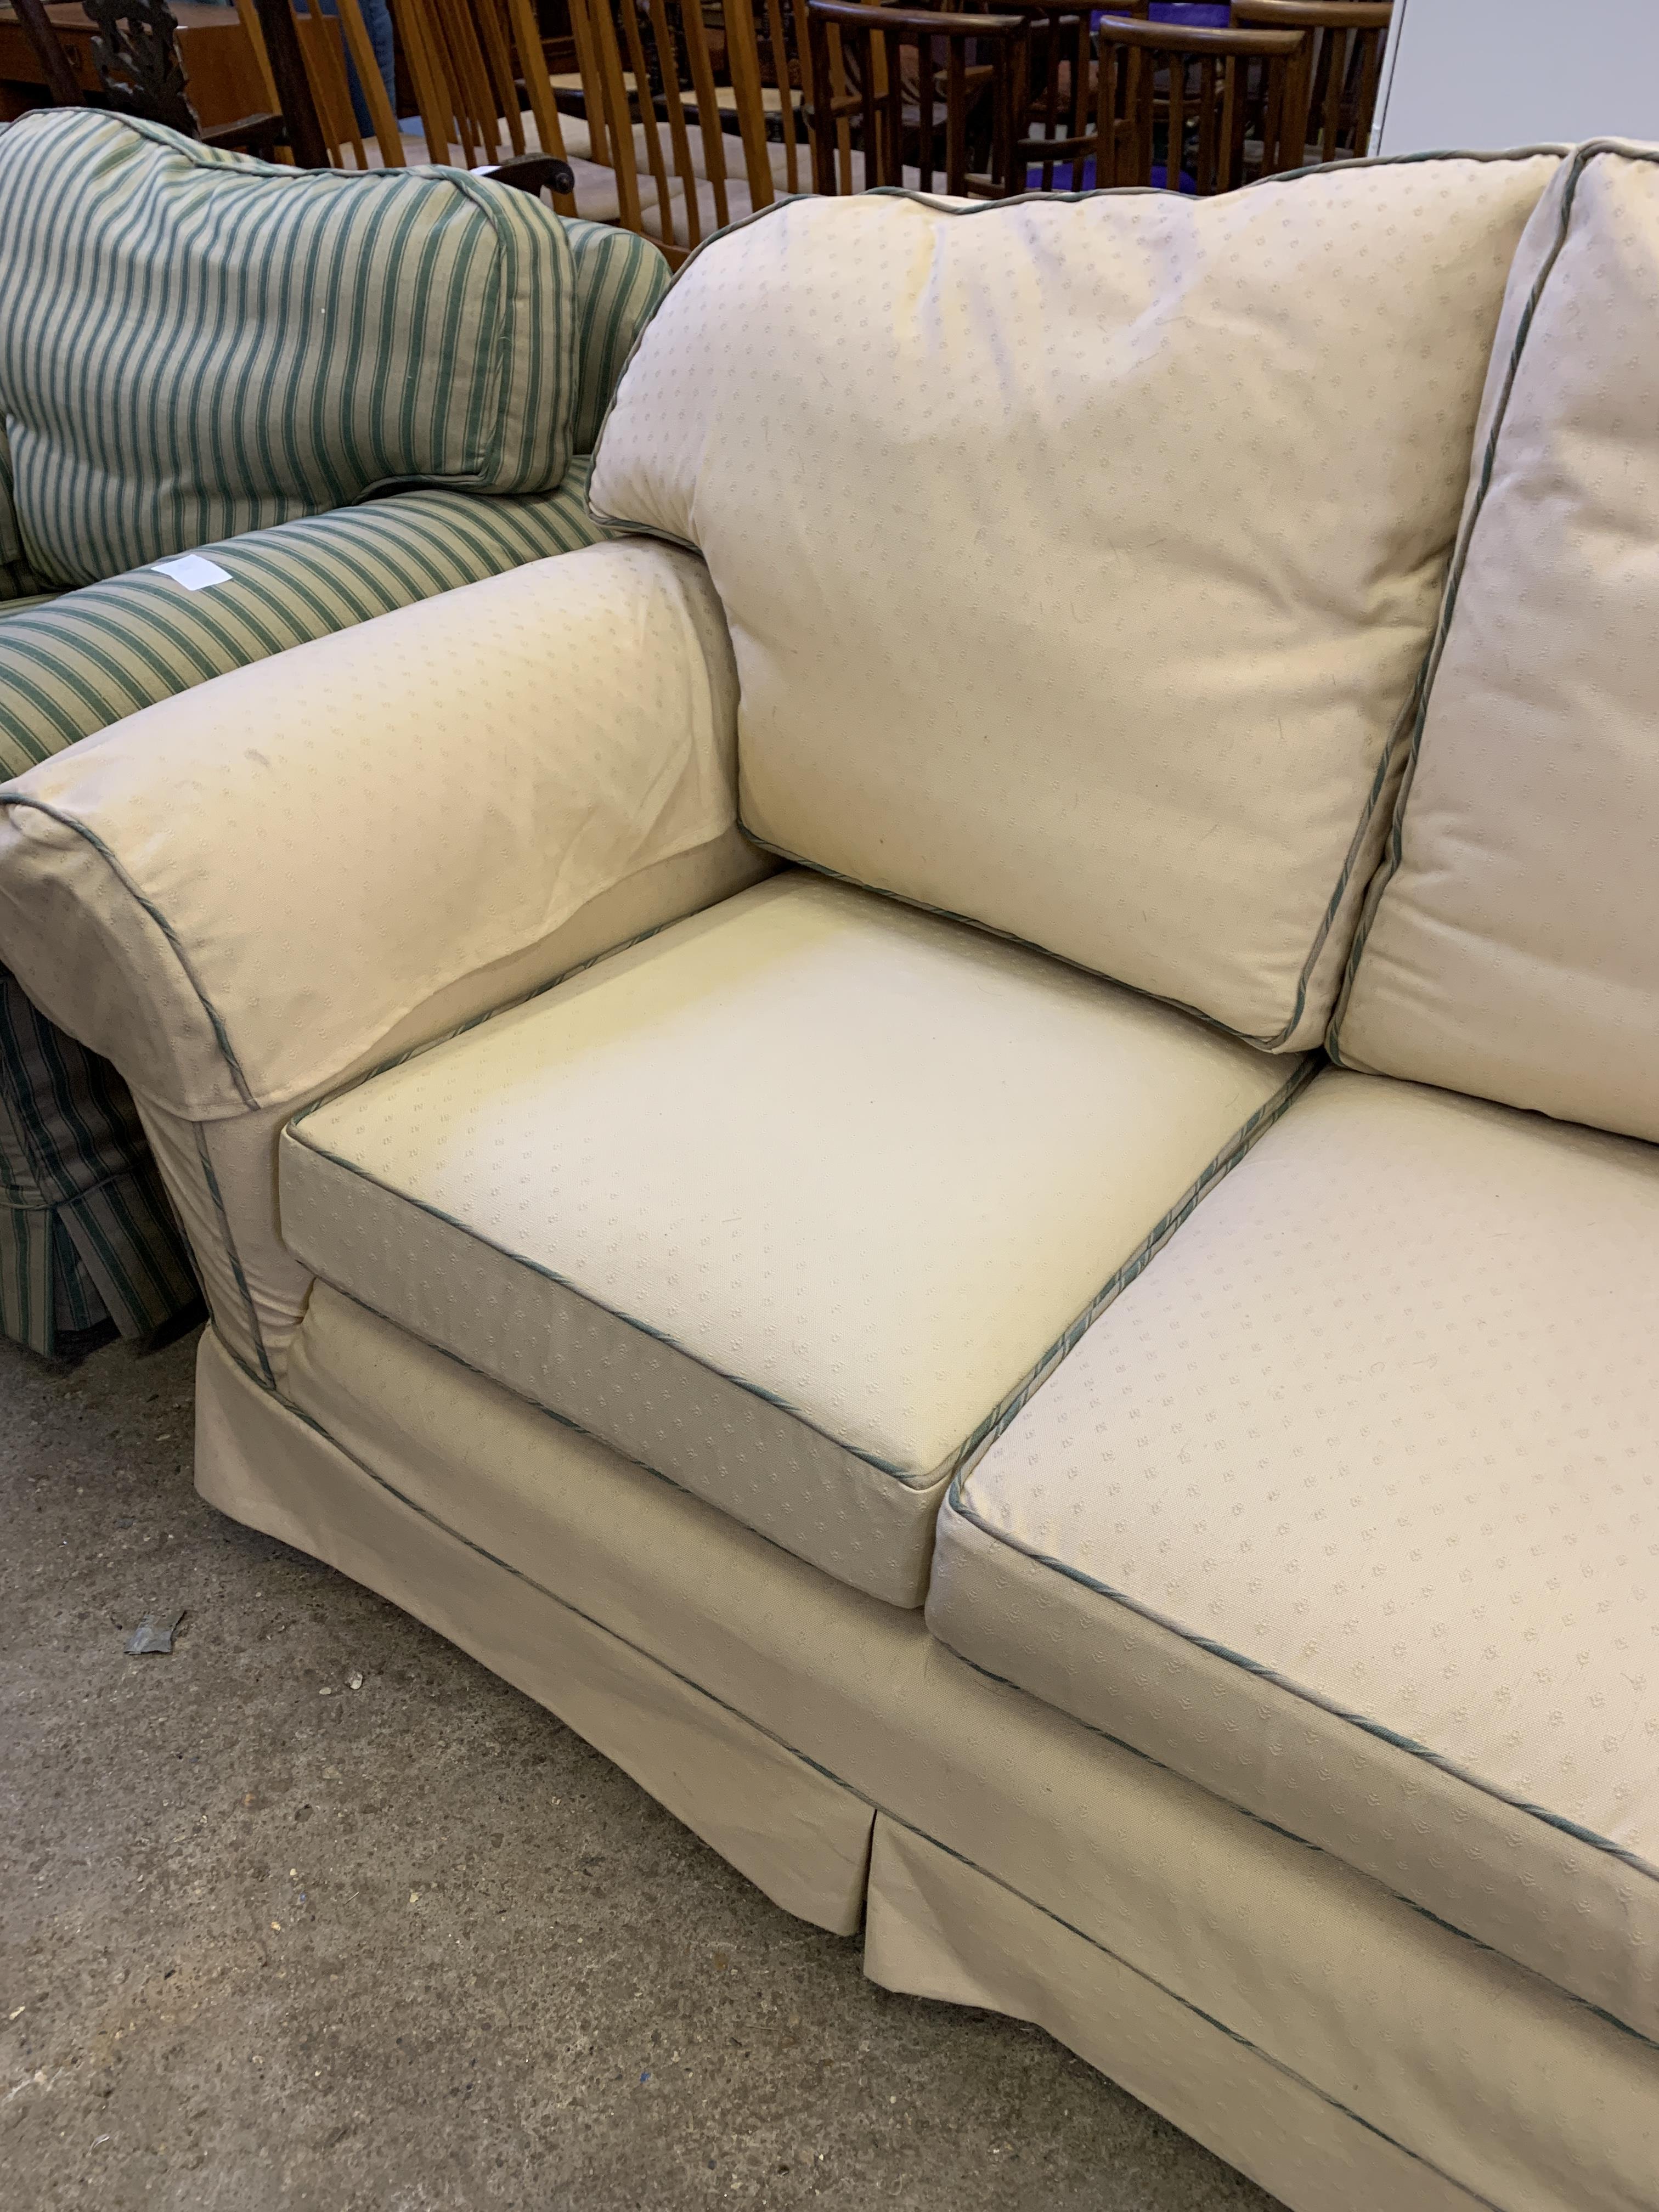 Cream two seat sofa - Image 2 of 4